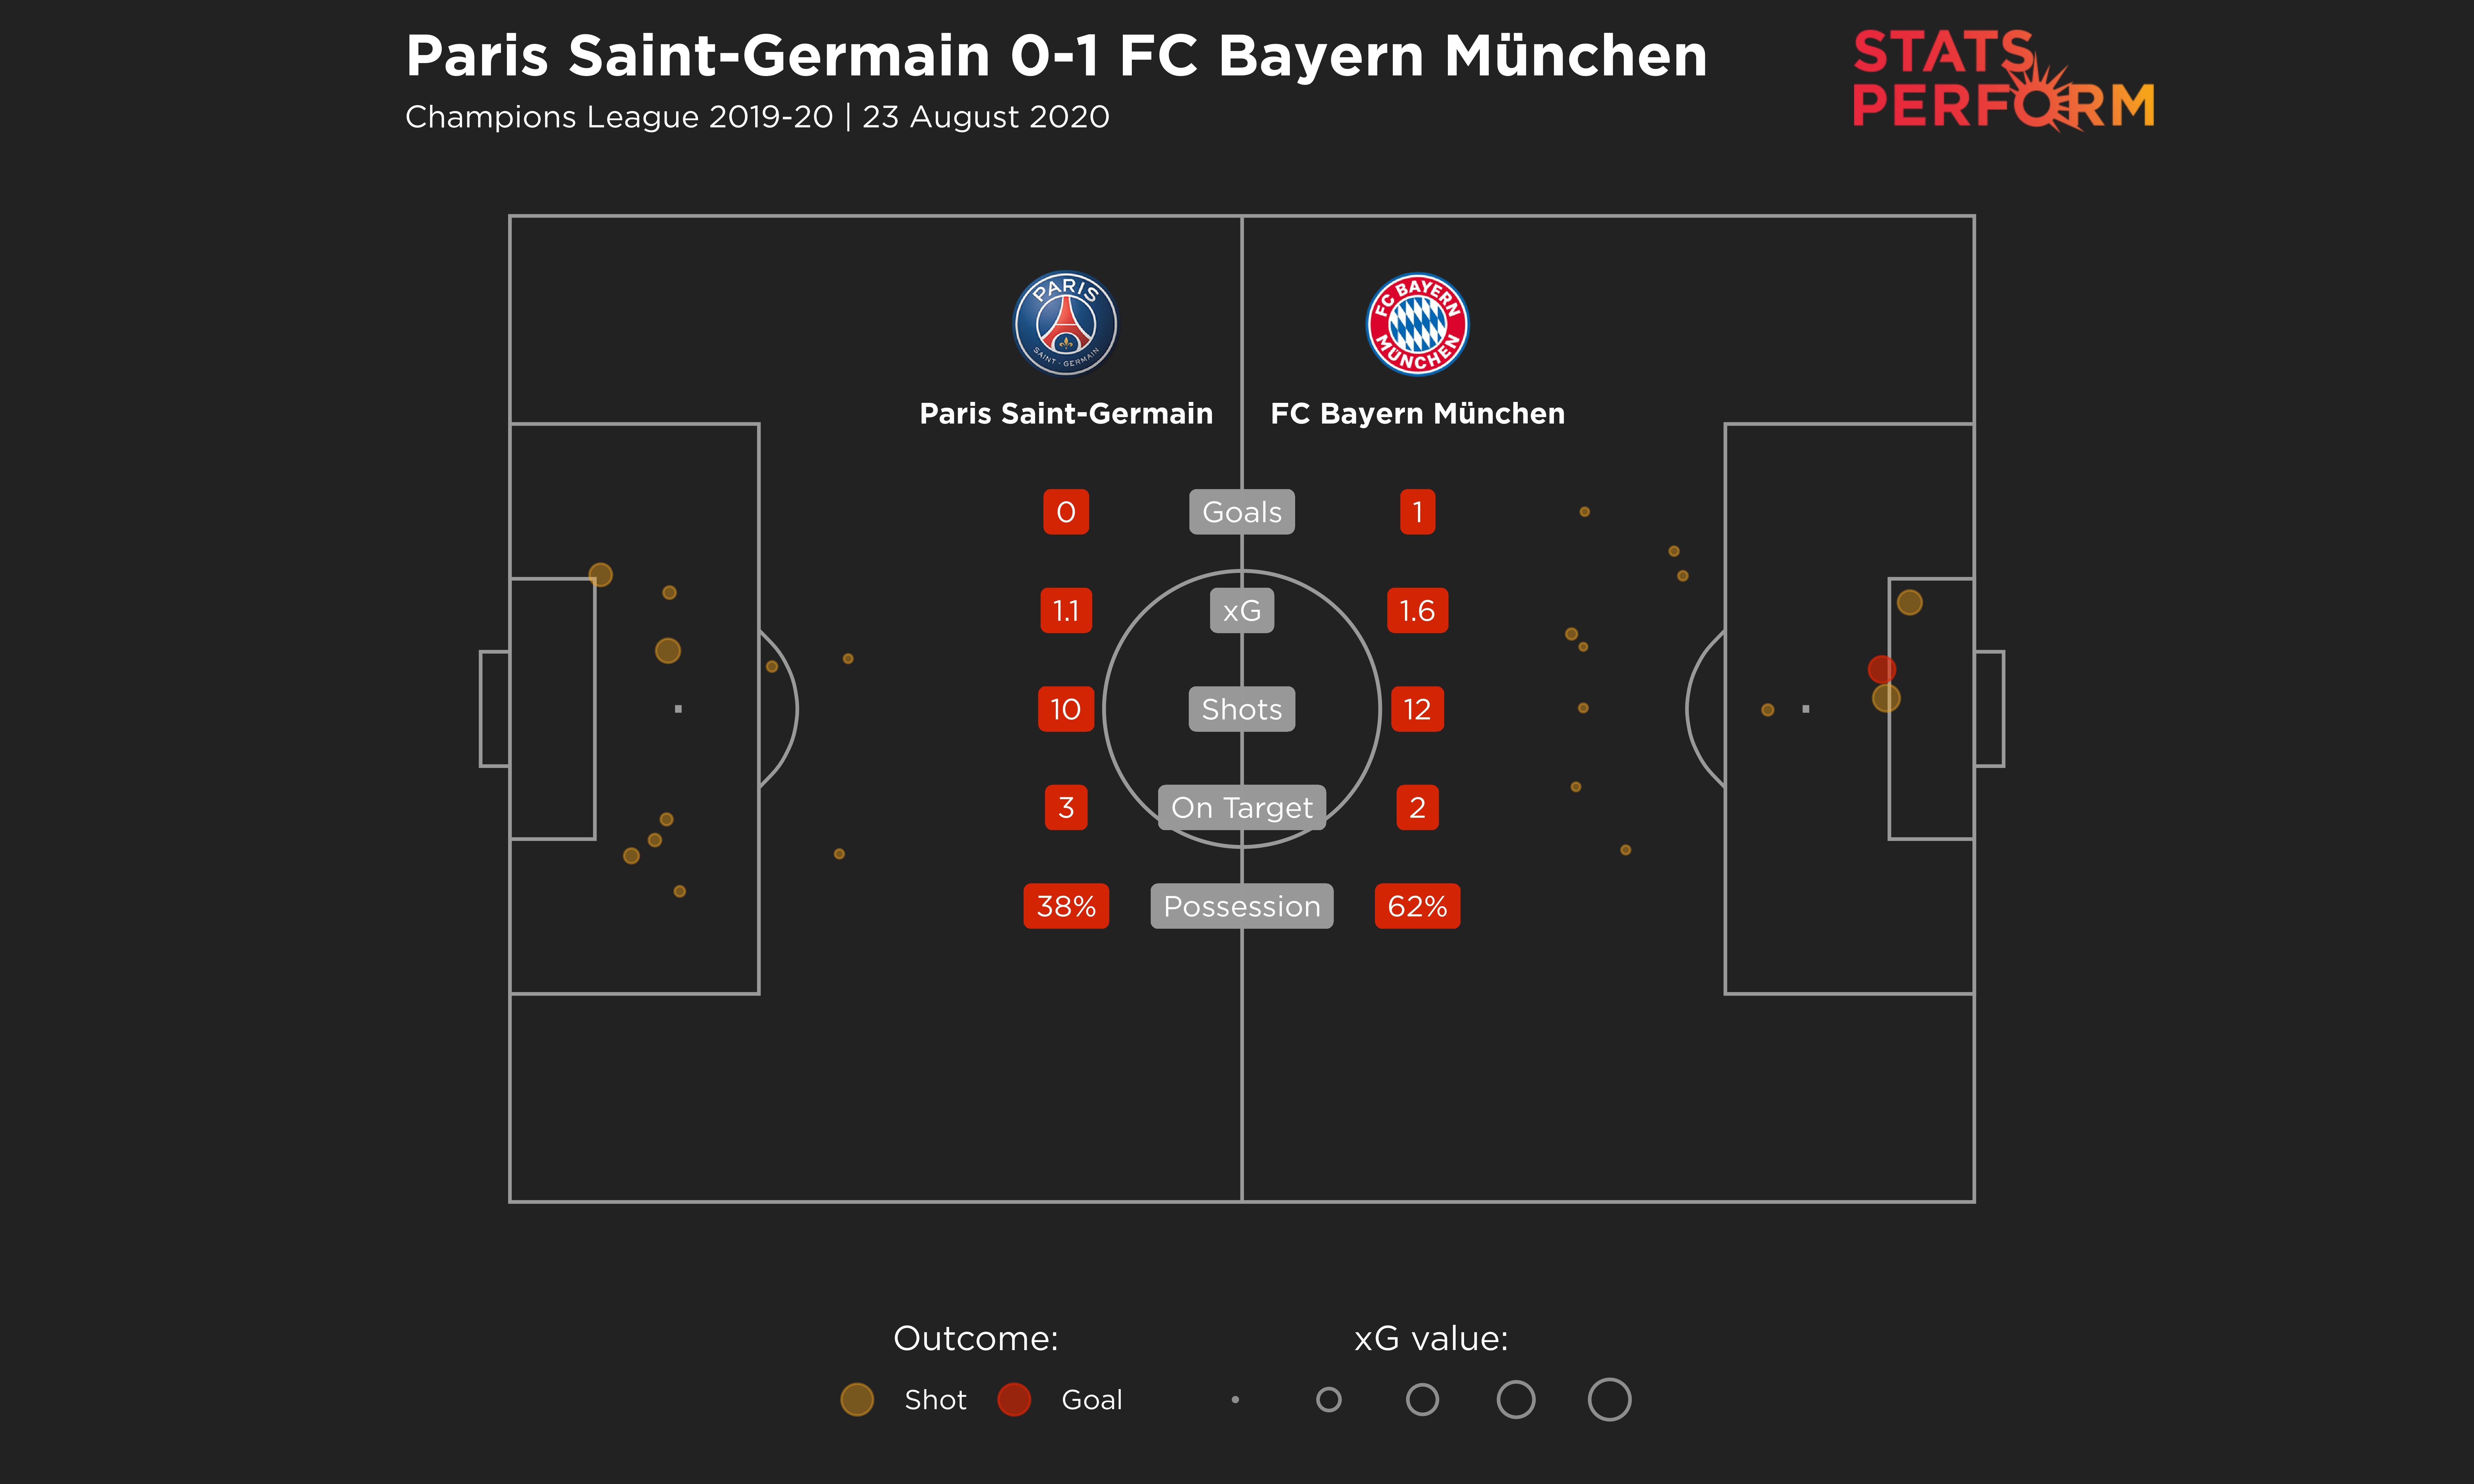 Bayern edged past PSG in last season's final